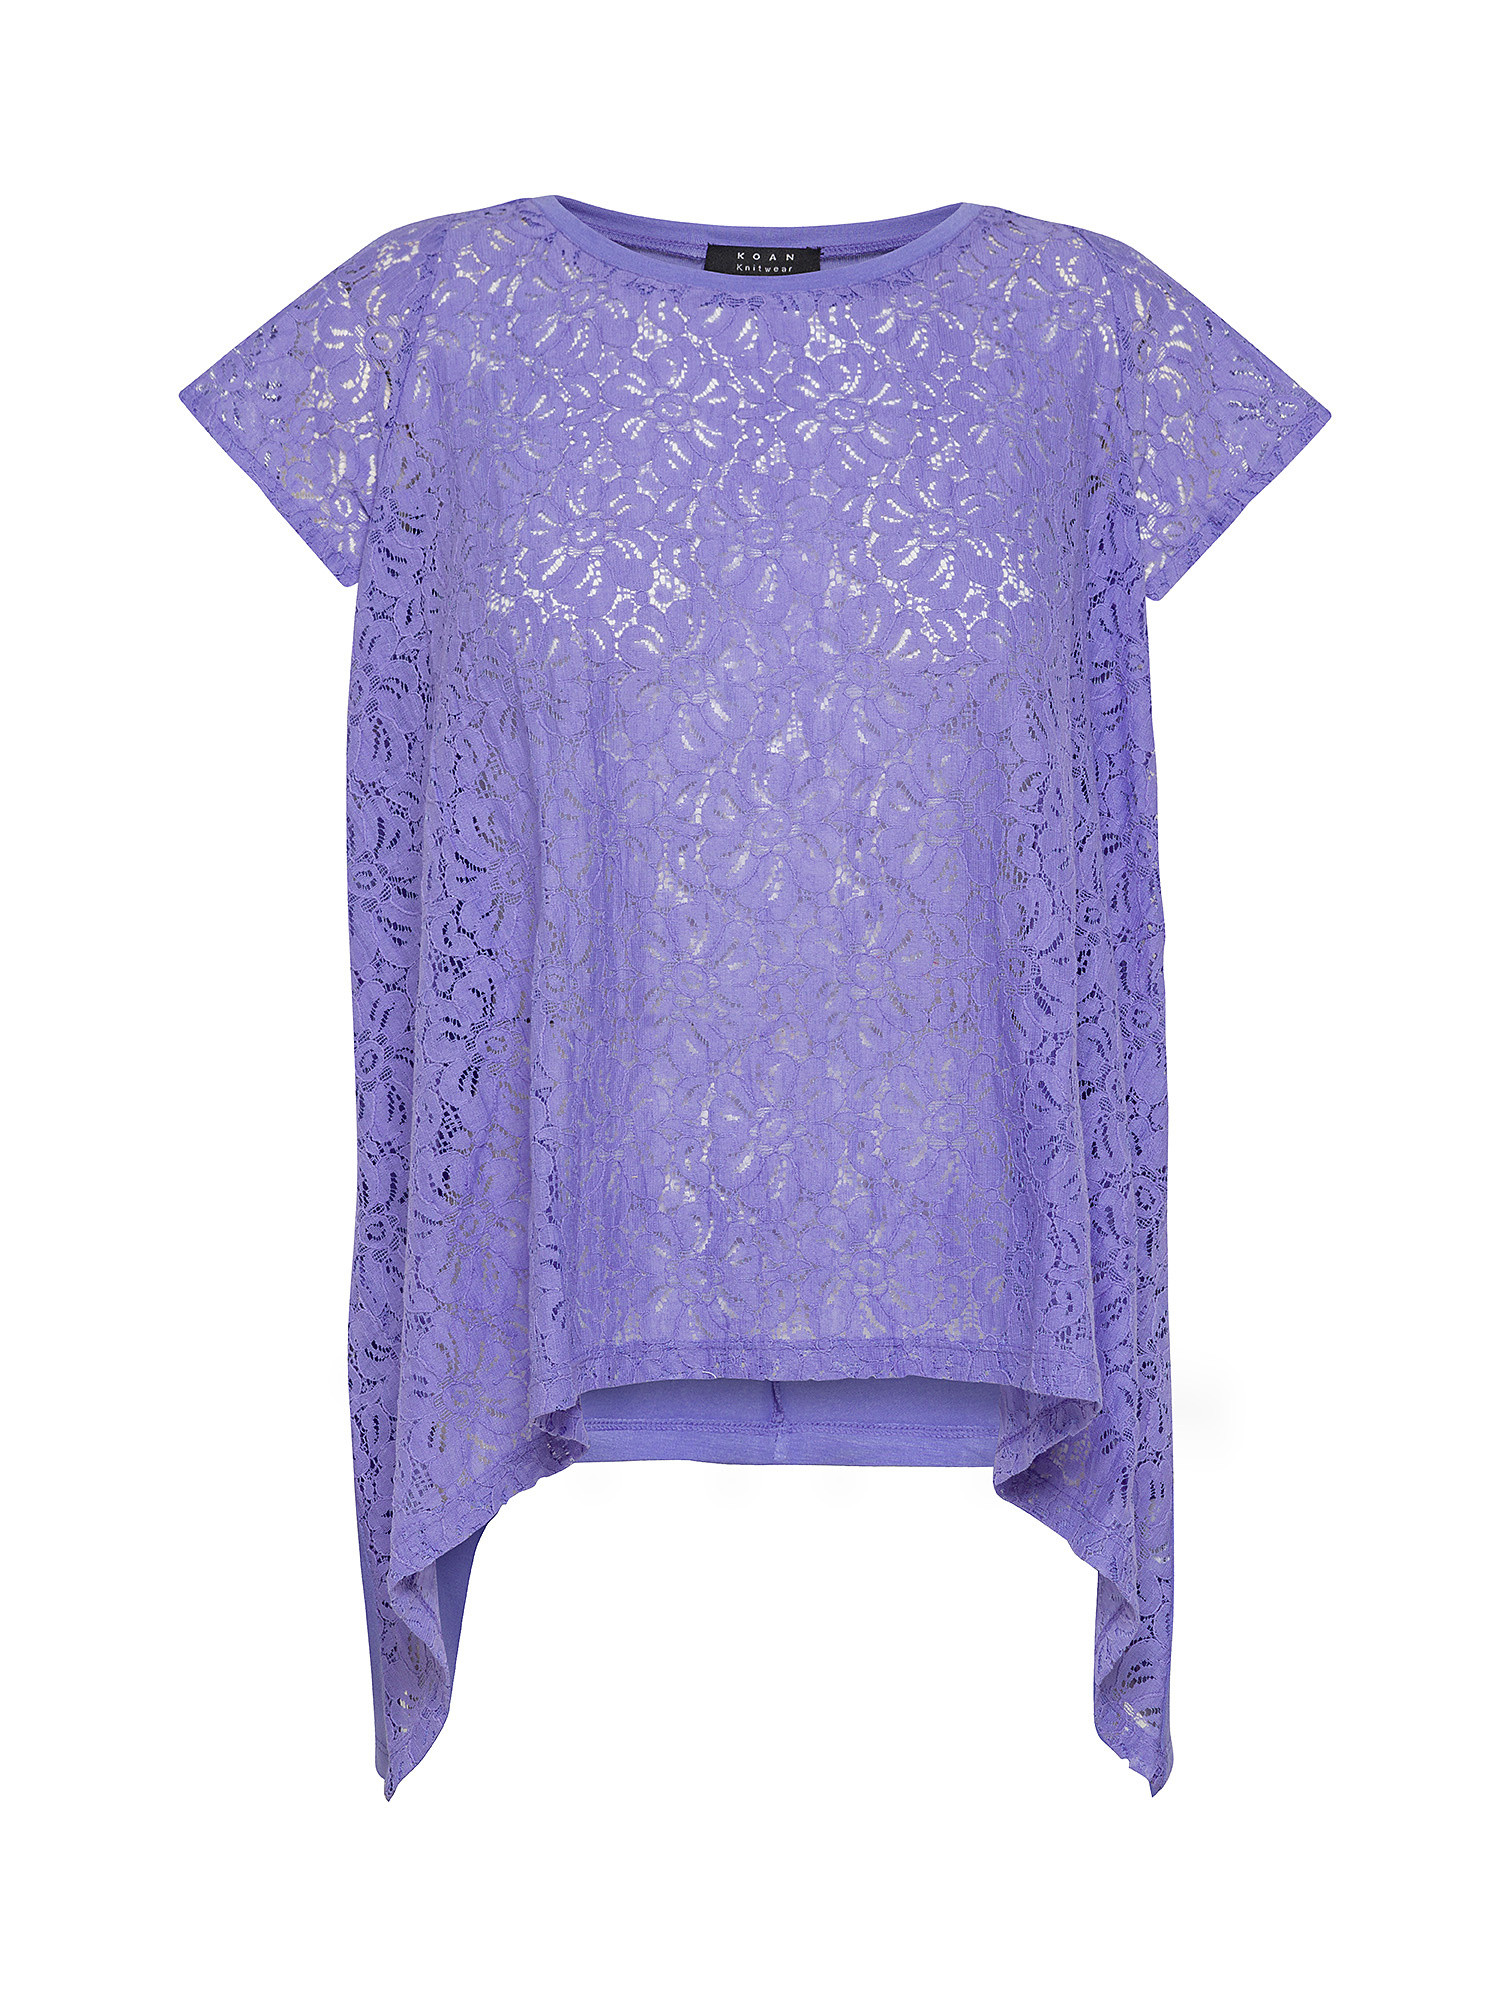 Koan - T-shirt svasata con pizzo, Viola lilla, large image number 0